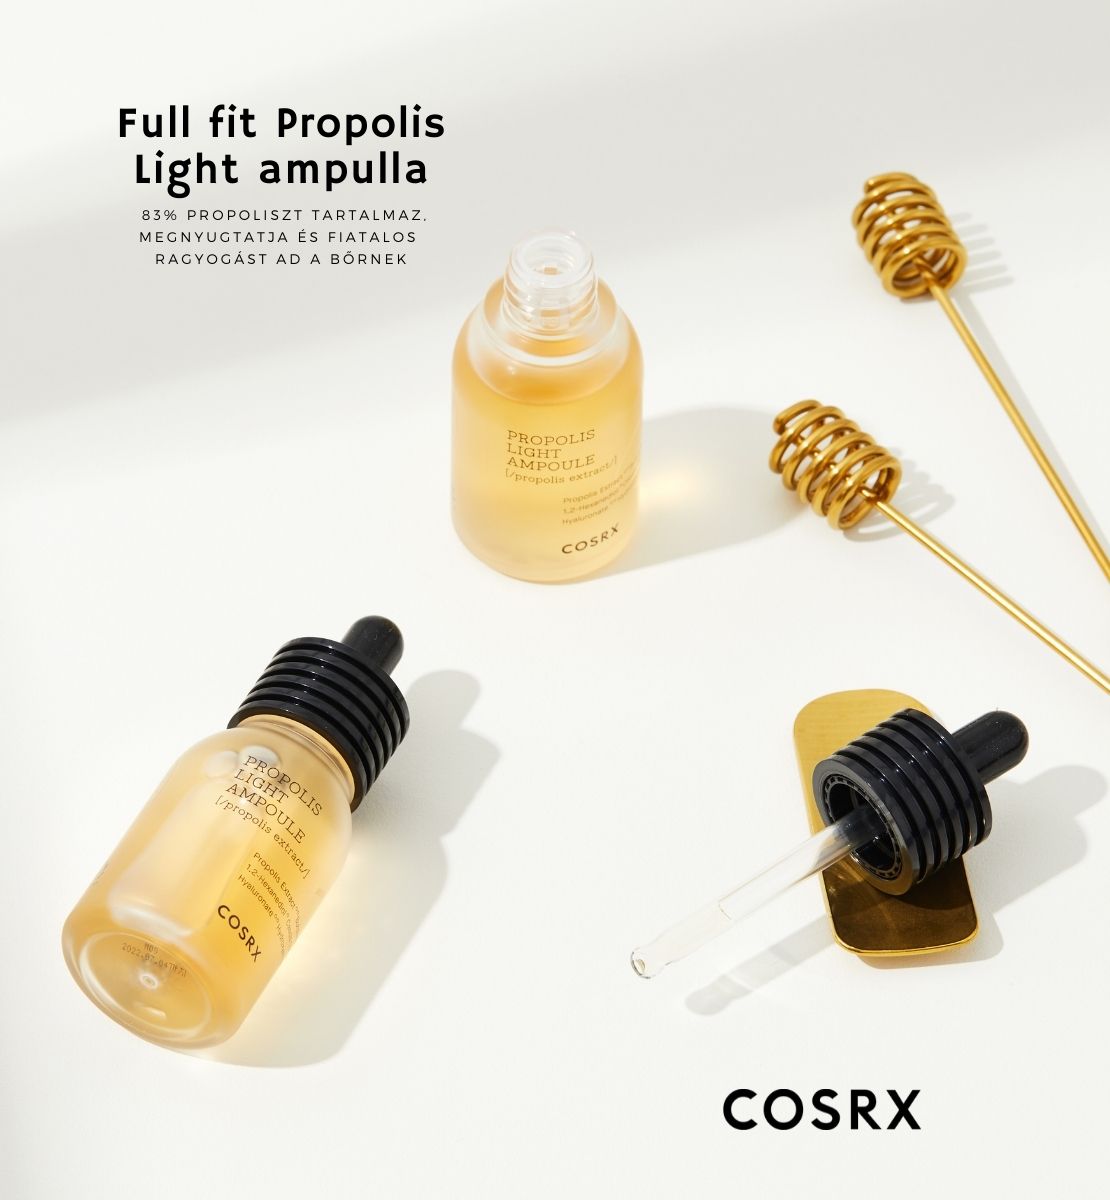 COSRX-Full-fit Propolis-Light-ampulla-leiras-1